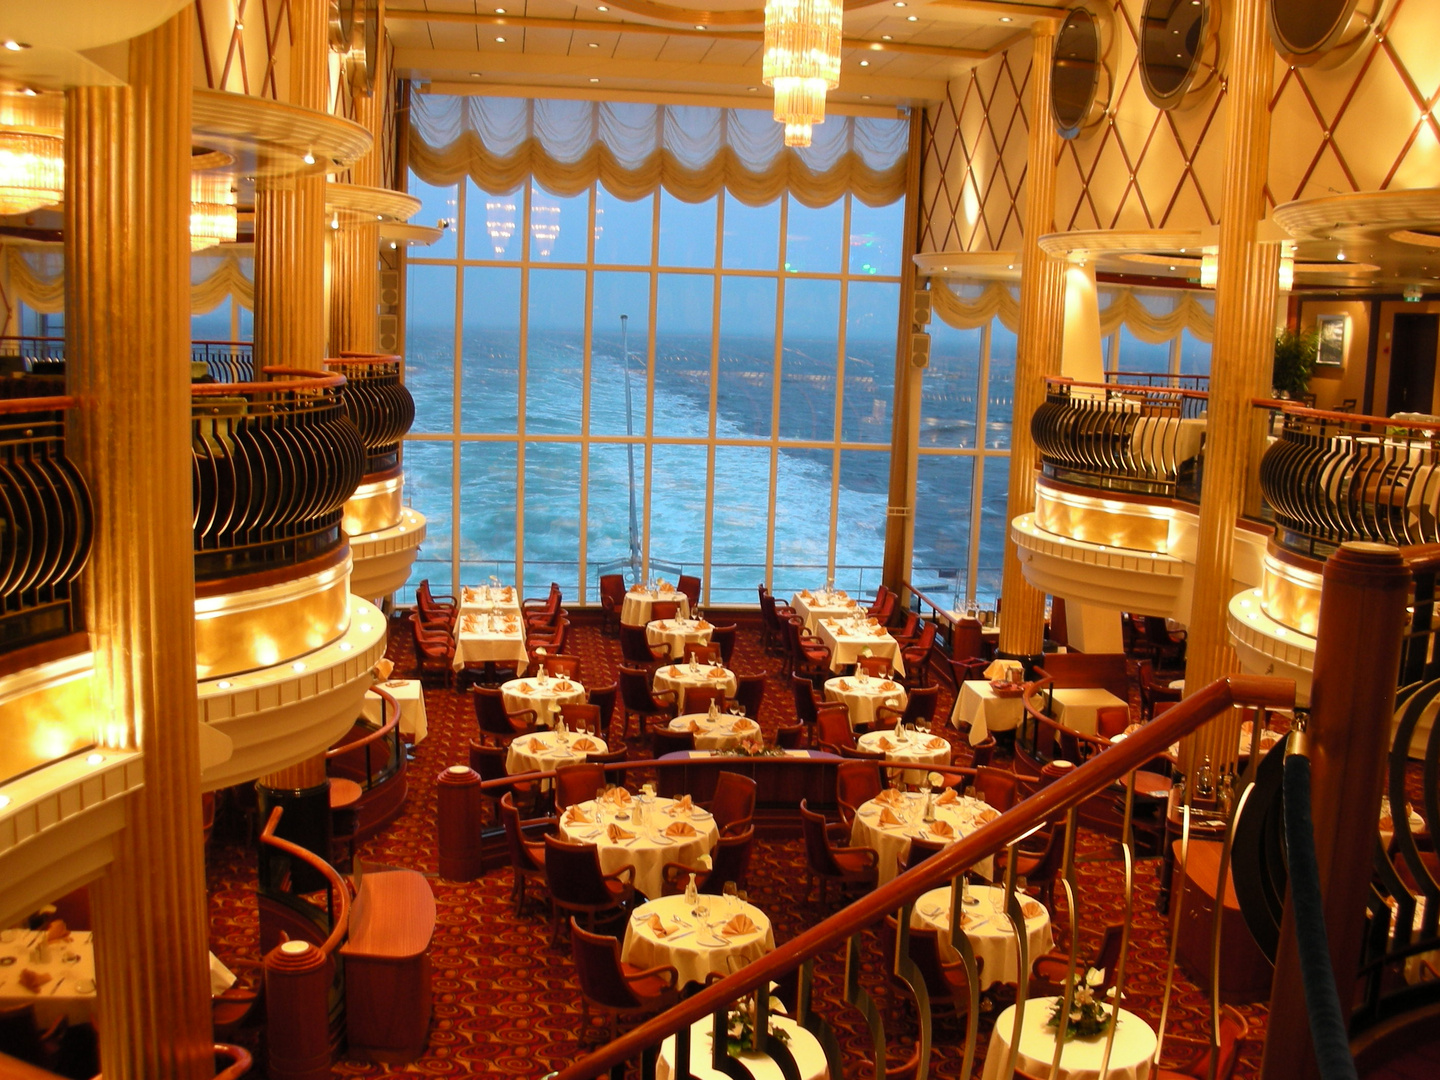 Titanic's dining salon?